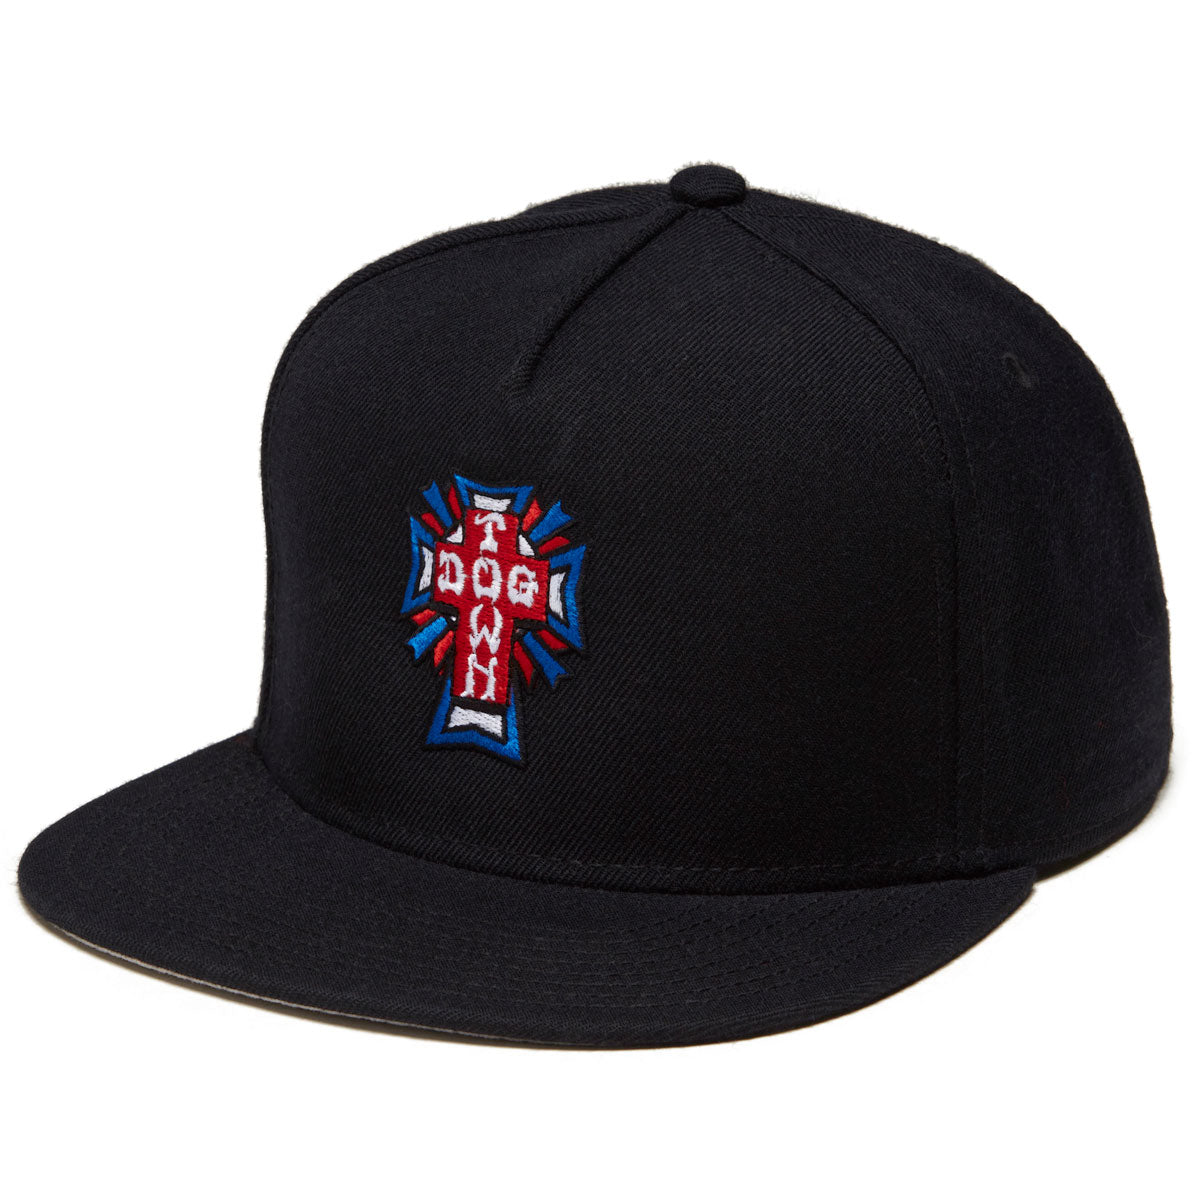 Dogtown Cross Logo USA Snapback Hat - Black image 1